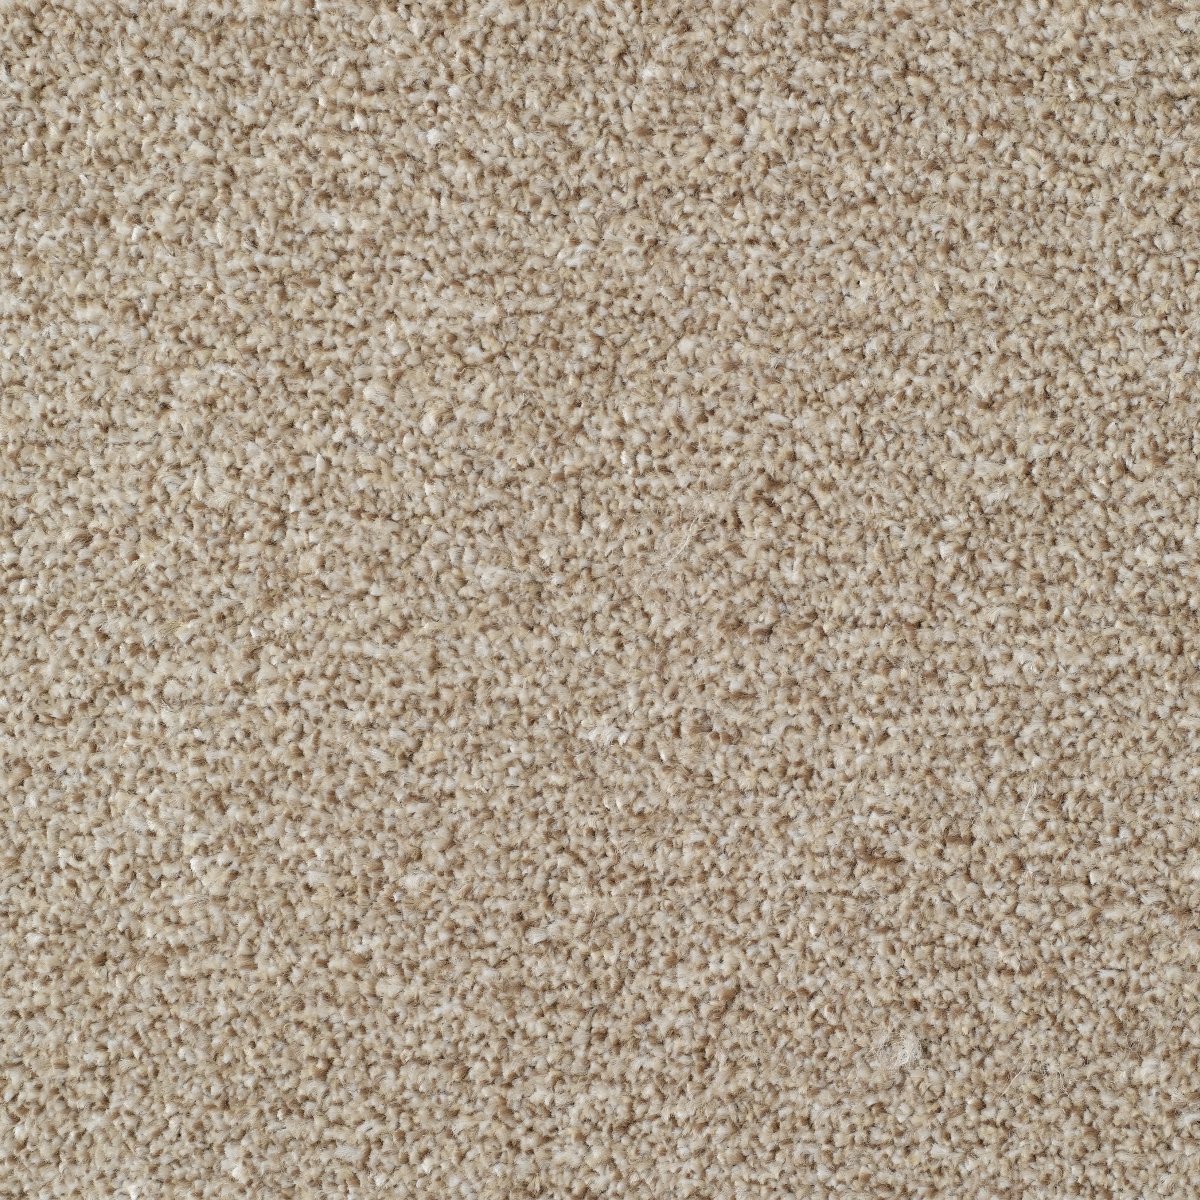 Seaton Valley Soft Deep Pile Saxony Carpet - Beige